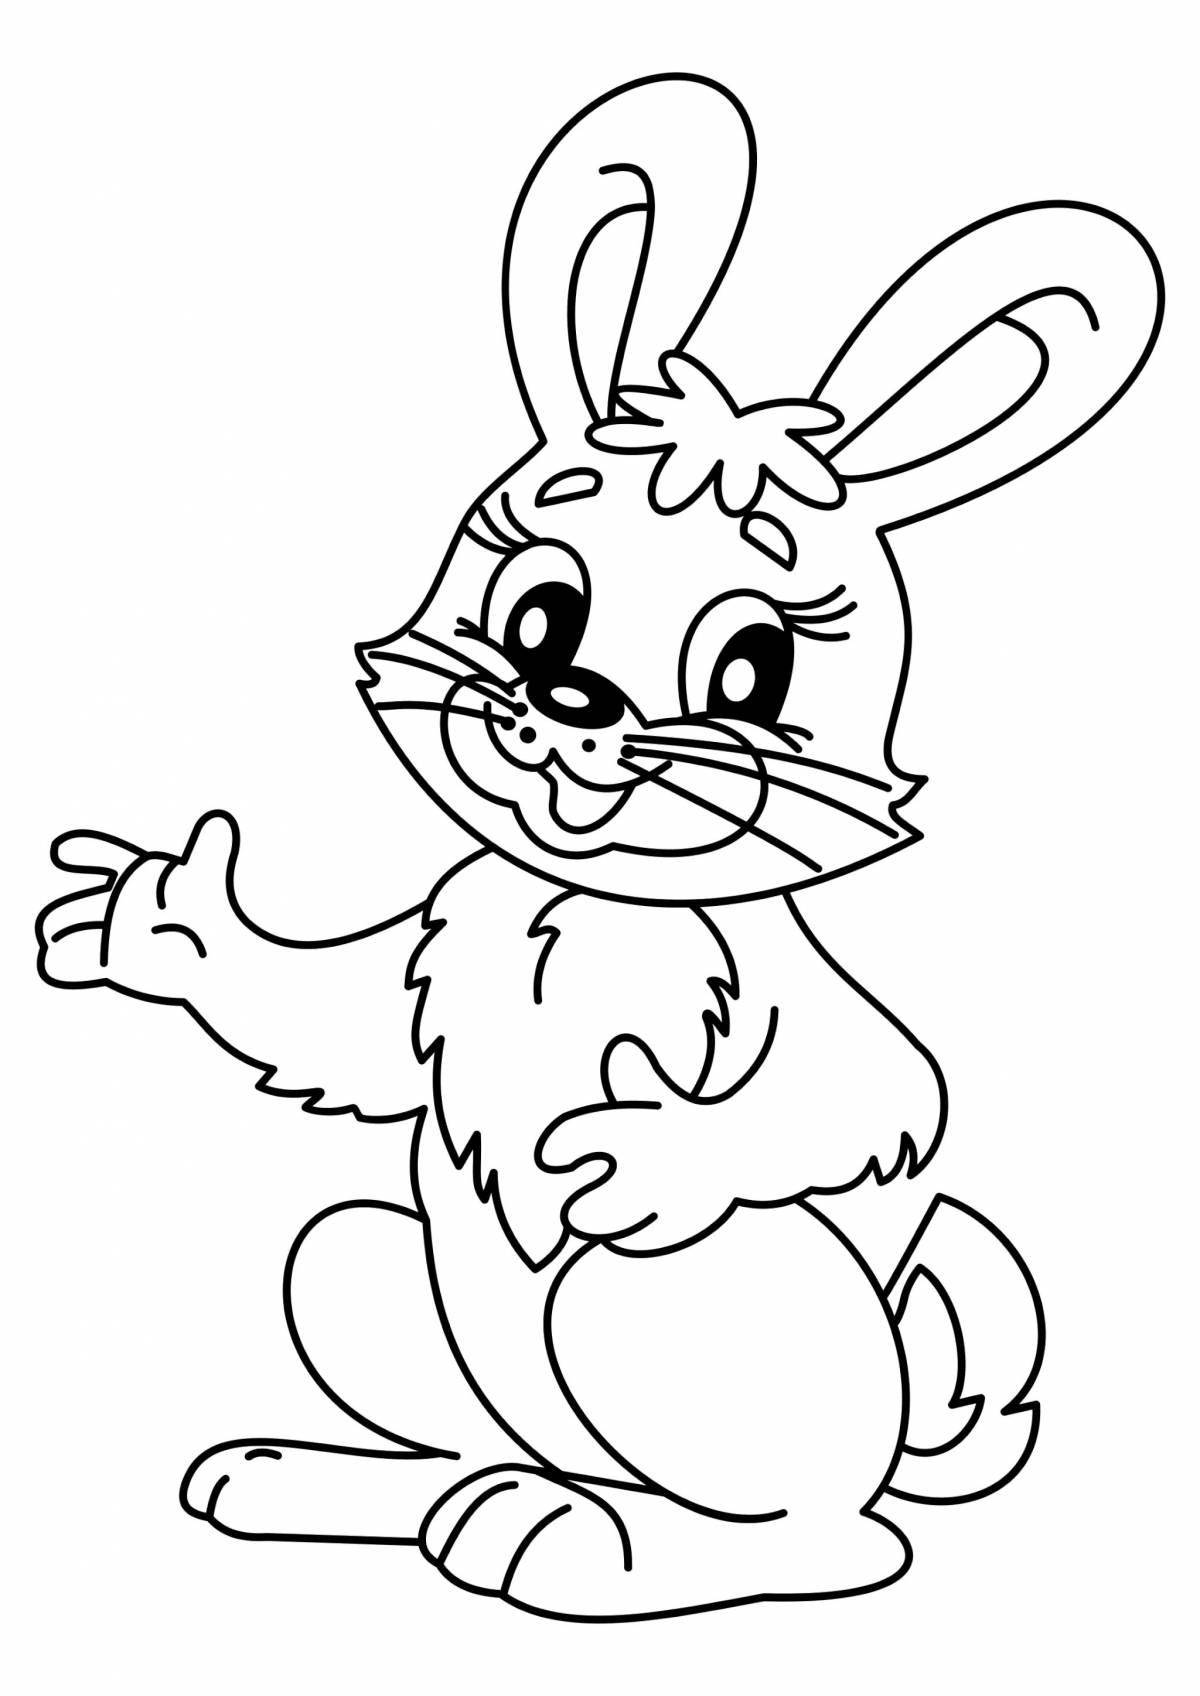 Drawing of a joyful hare